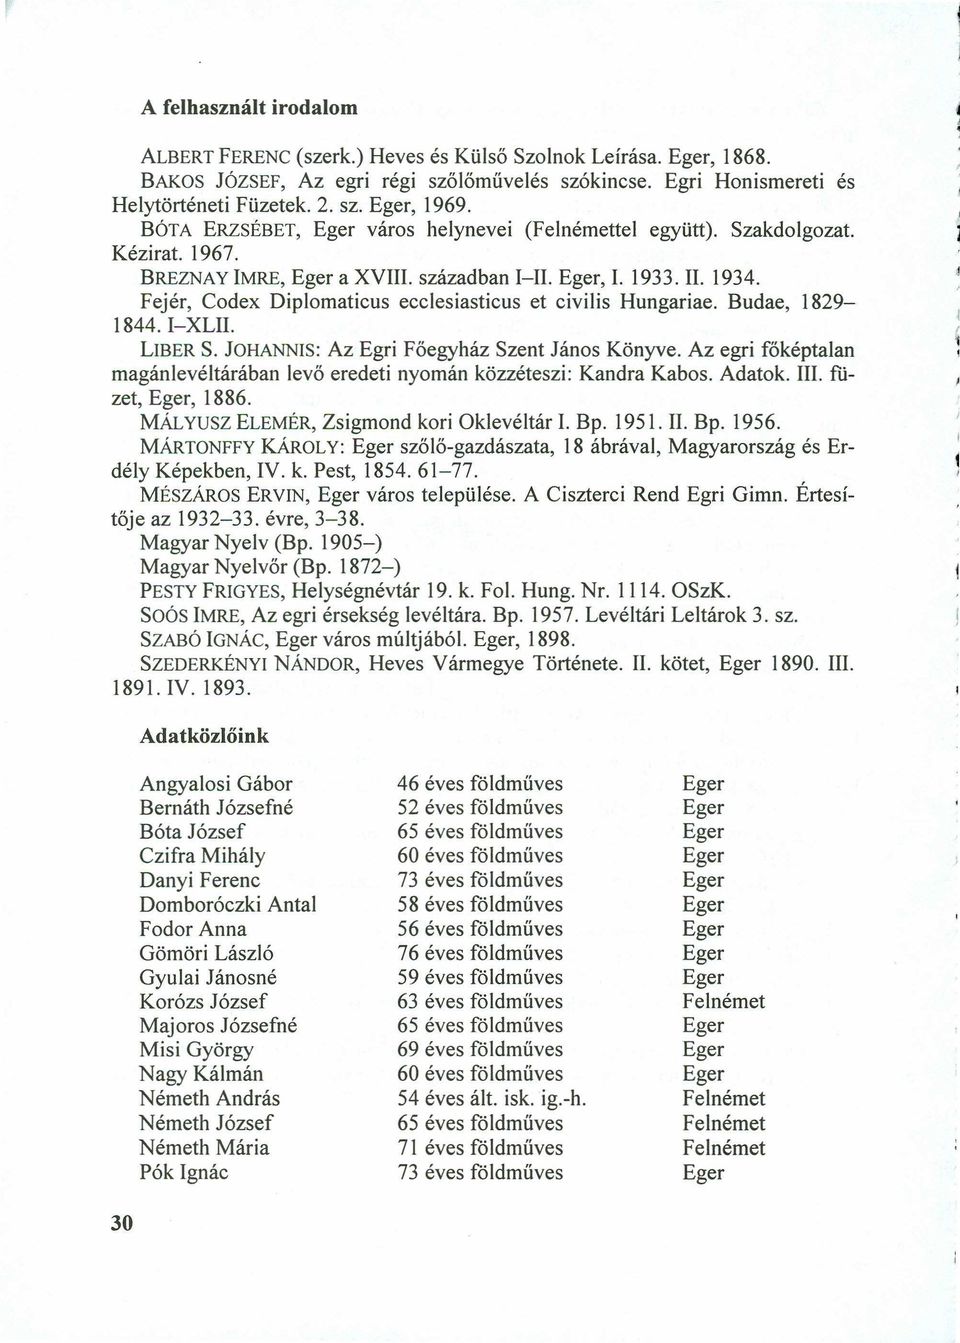 BREZNAY IMRE, a XVIII. században 1-11., 1. 1933. II. 1934. Fejér, Codex Diplomaticus ecclesiasticus et civilis Hungariae. Budae, 1829-1844. I-XLII. LIBER S.